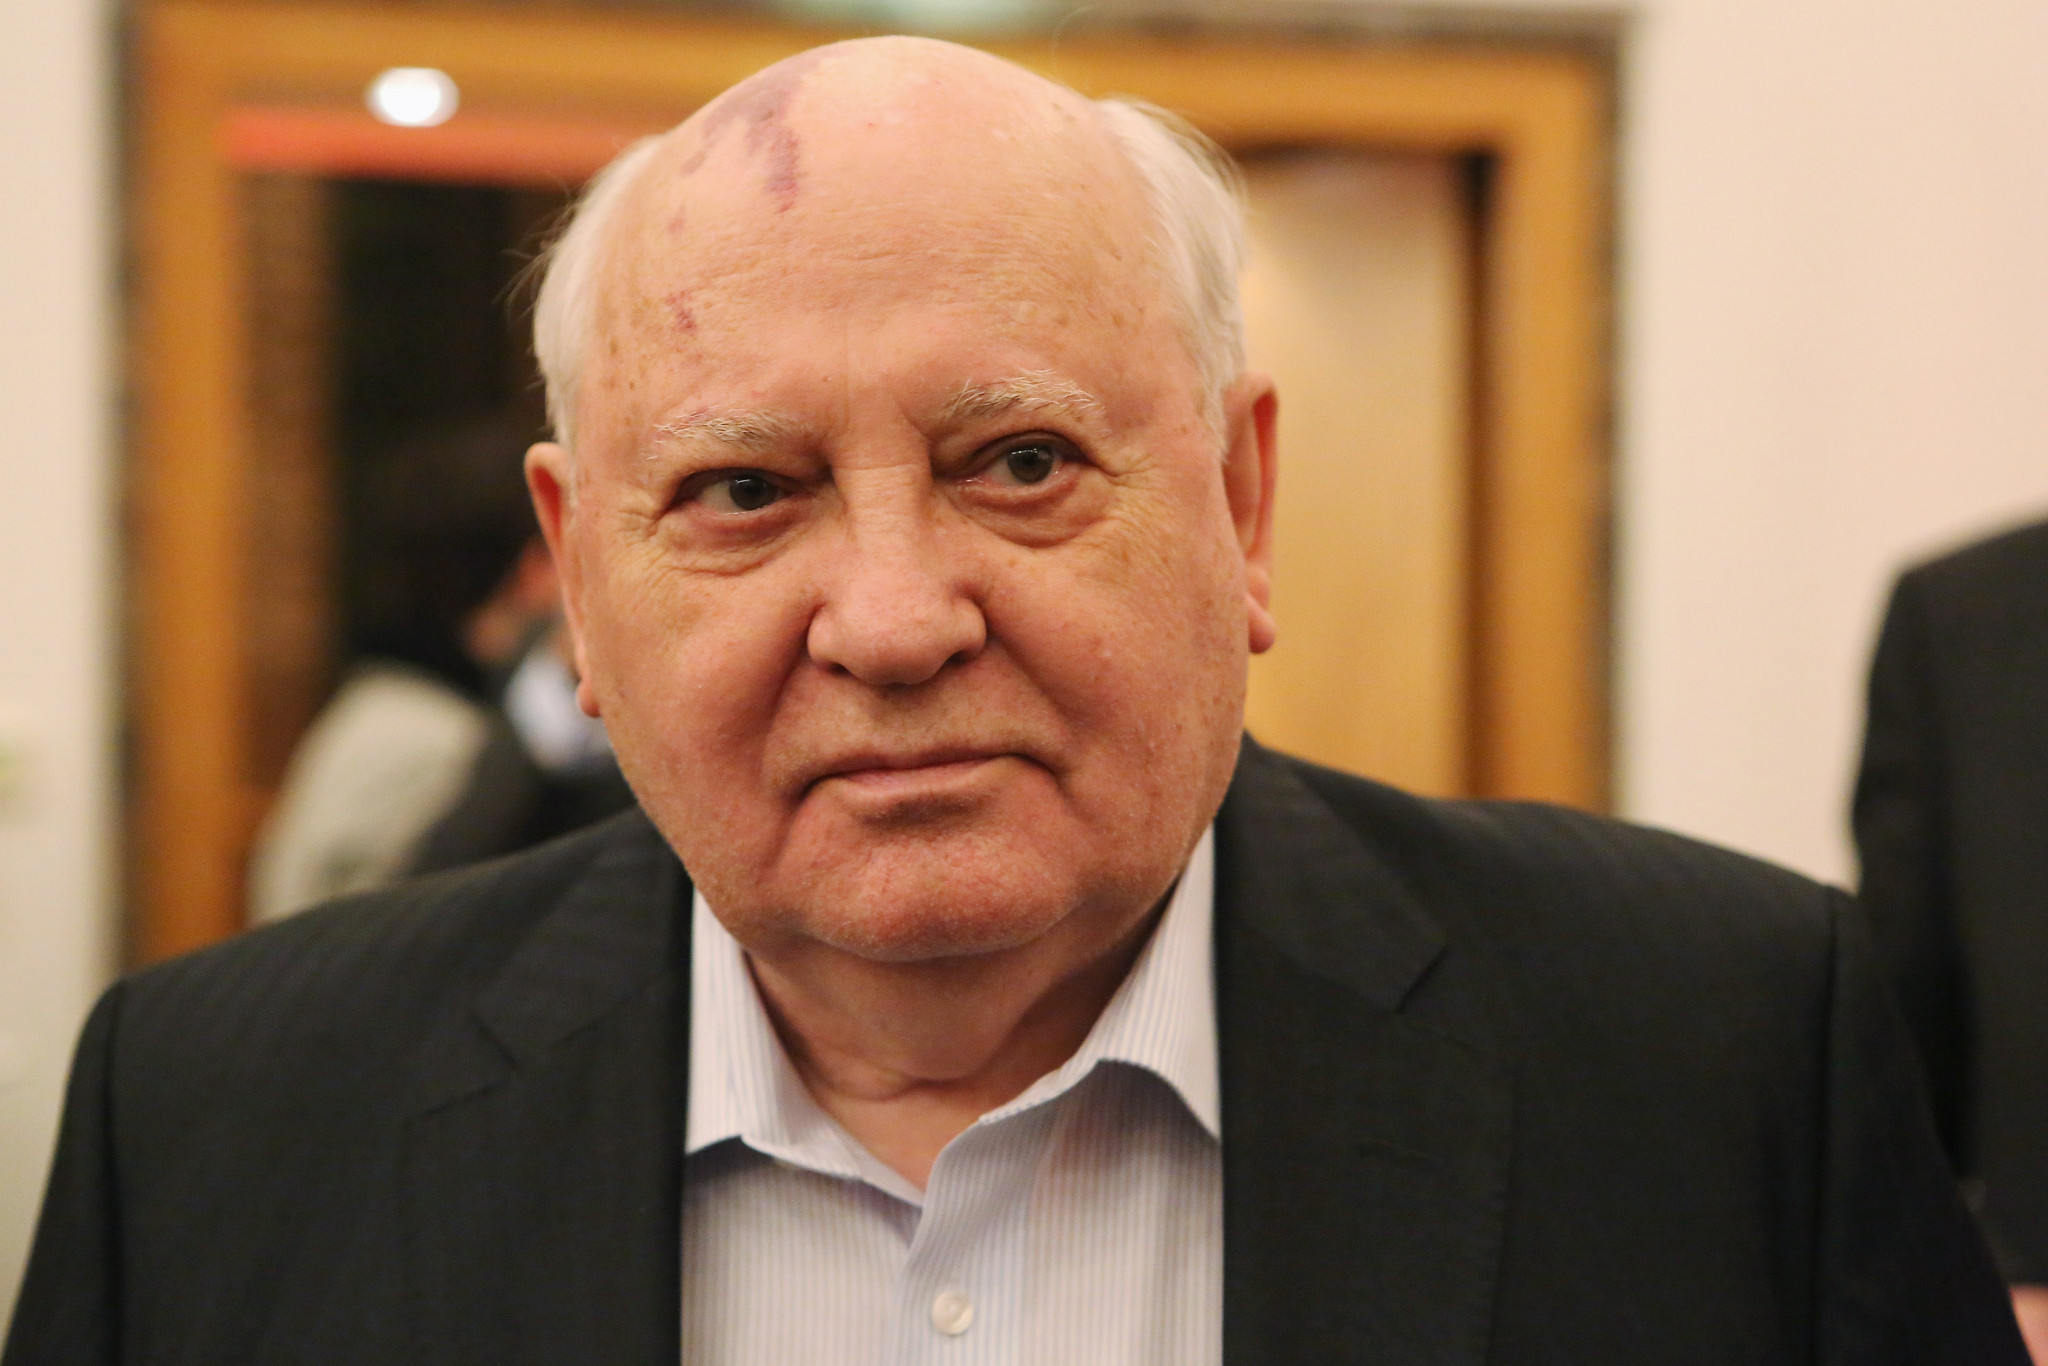 Gorbachev, whose era as Soviet leader redrew Olympic landscape, dies aged 91